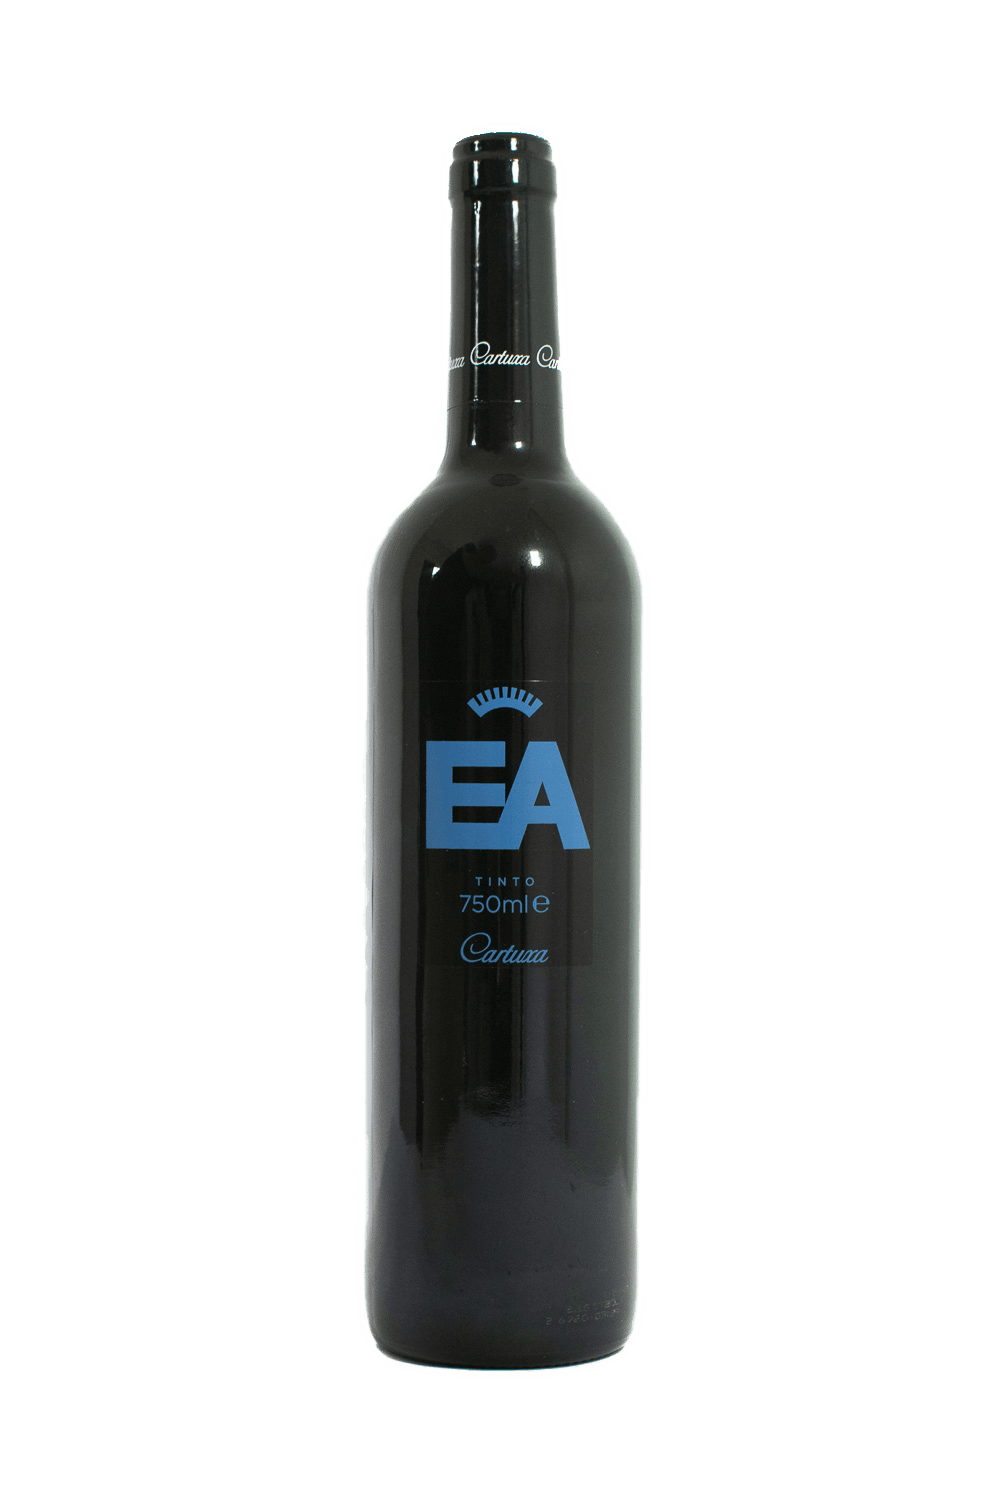 Cartuxa EA Tinto - The Blend Wines